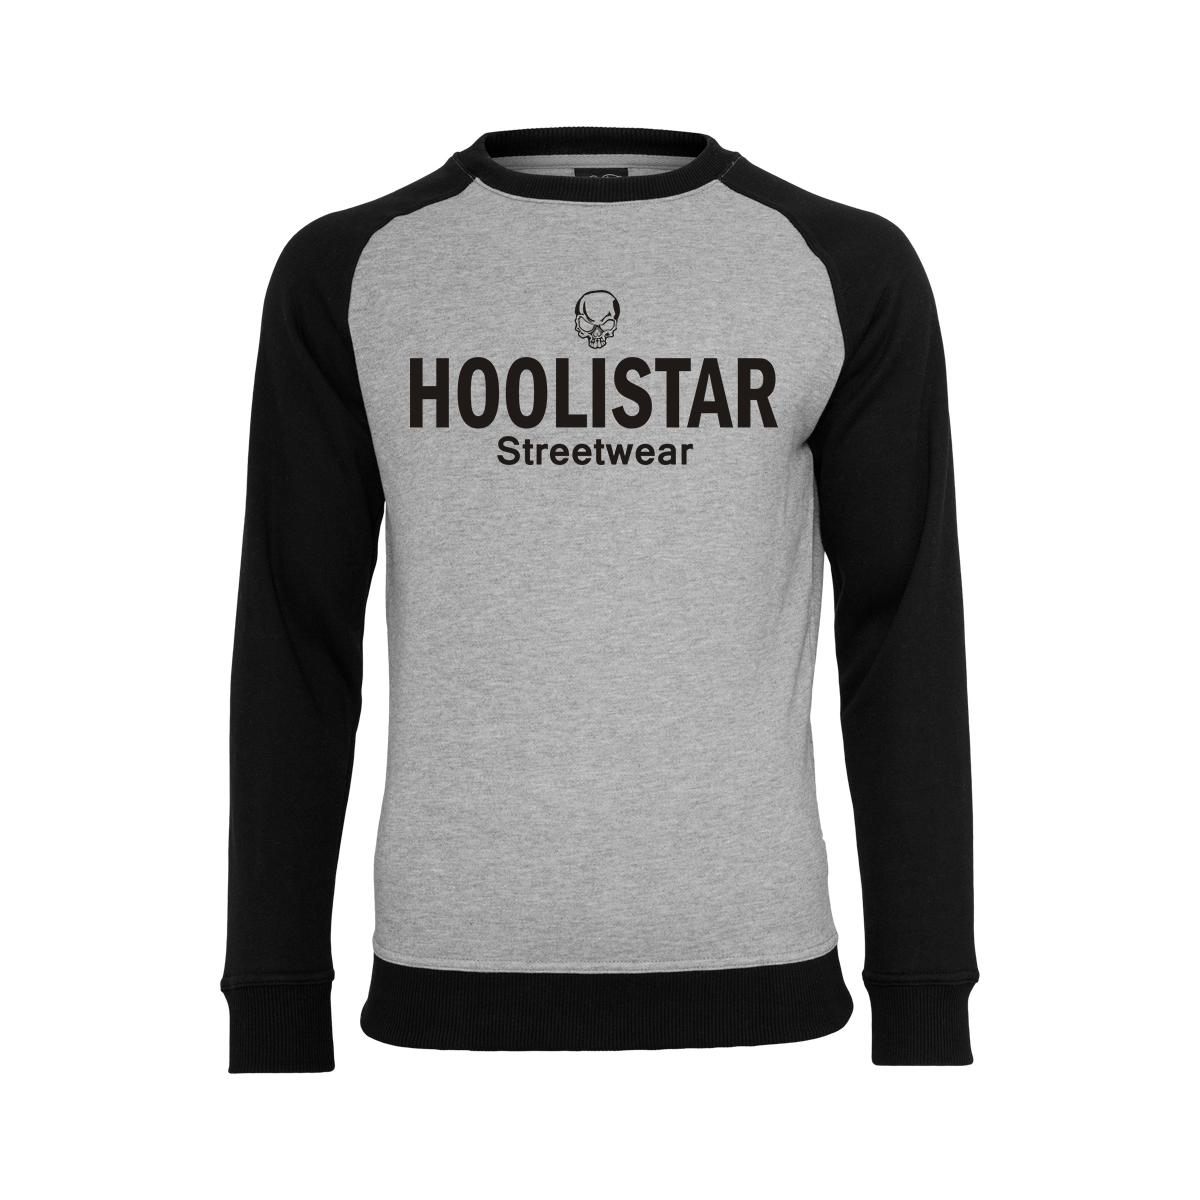 Hoolistar Streetwear - Männer Pullover - grau-schwarz